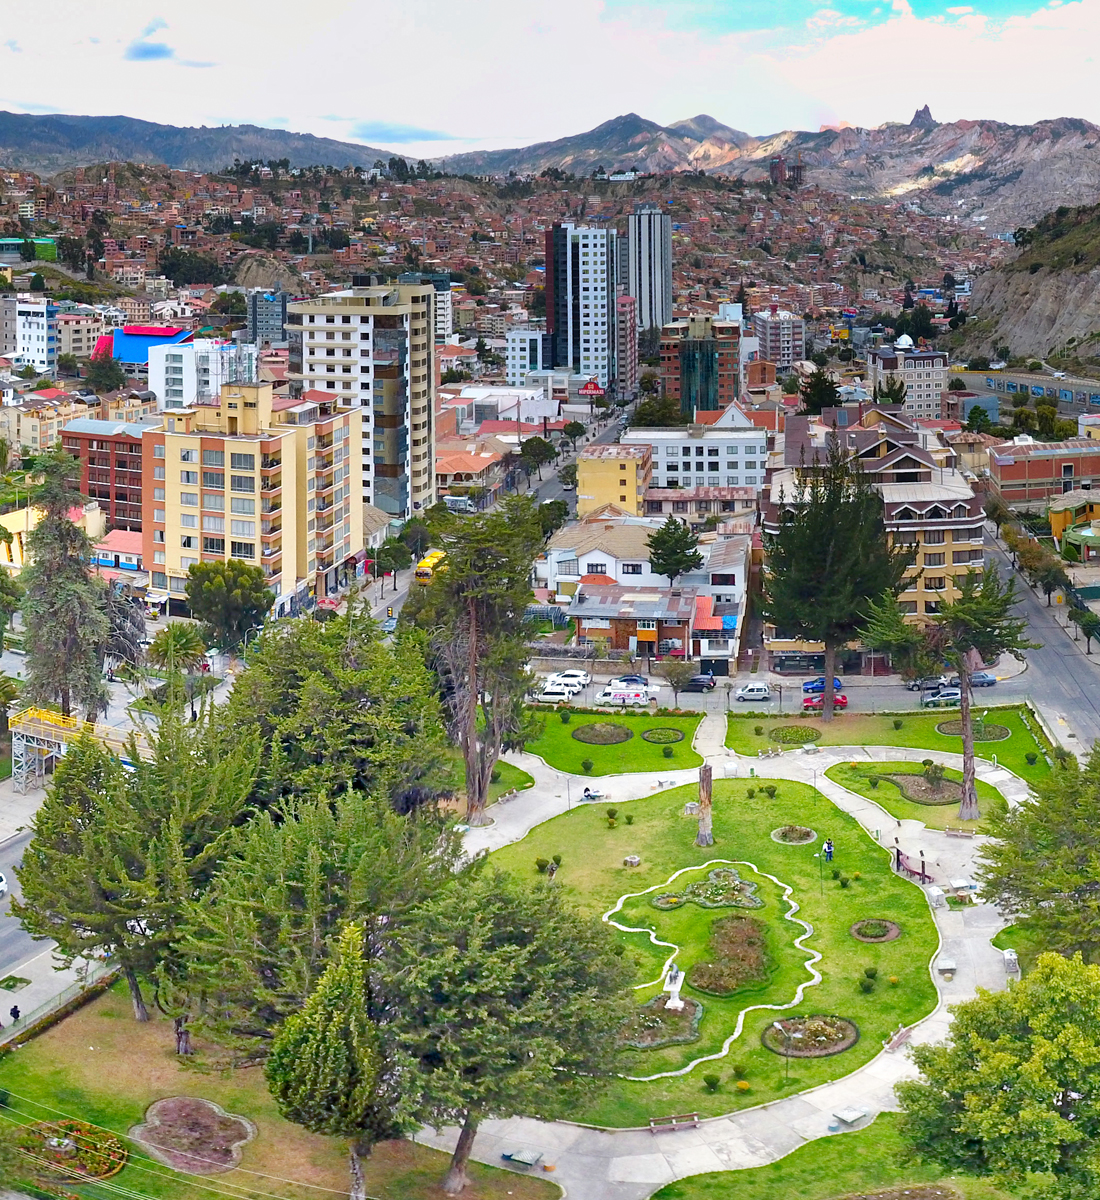 Ciudad de La Paz - Plaza Obrajes